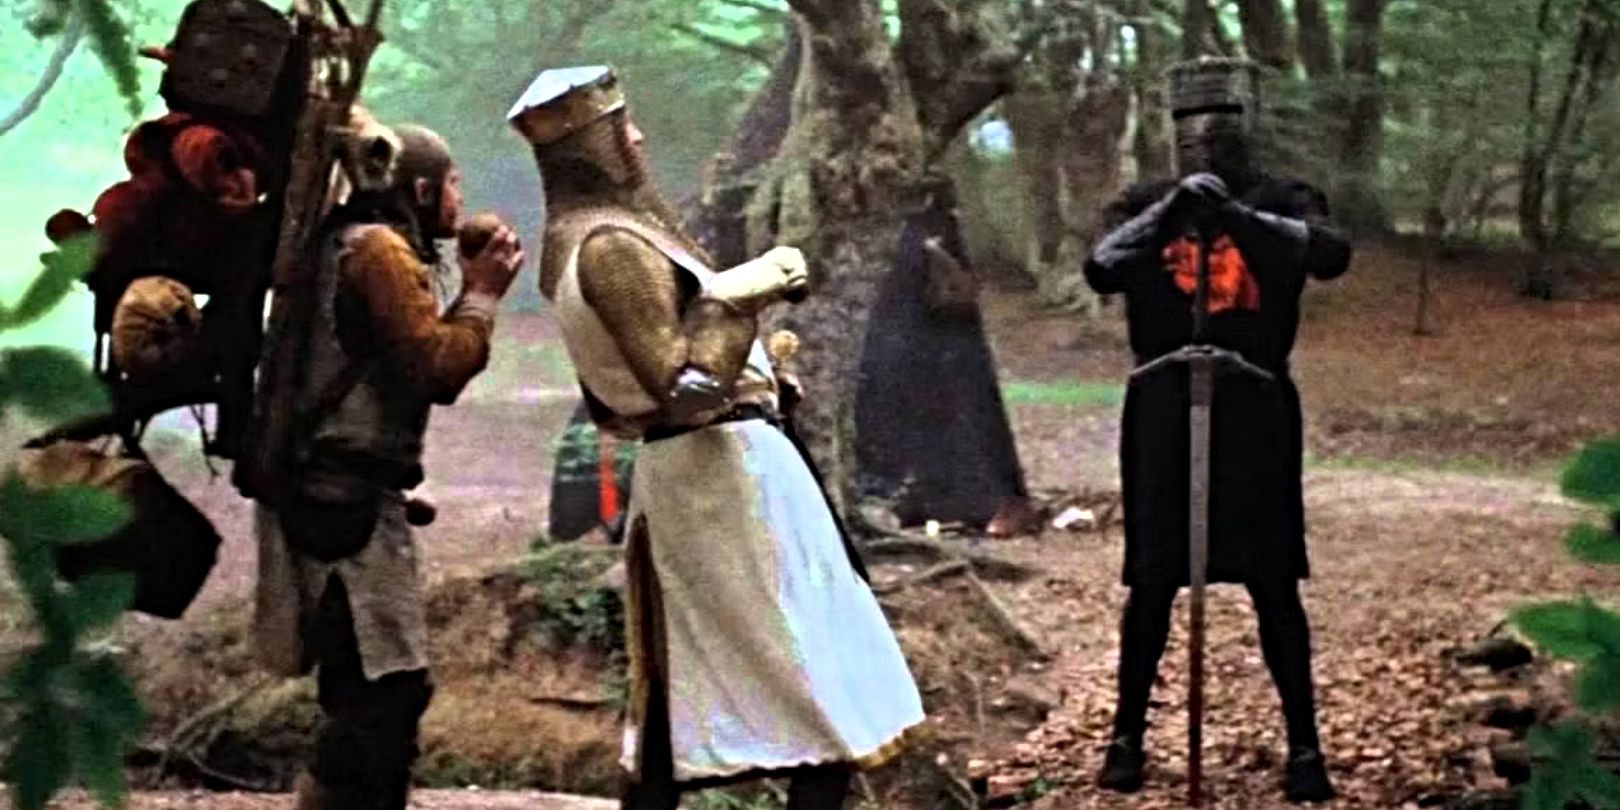 King Arthur (Graham Chapman) crosses the Black Knight (John Cleese) in Holy Grail